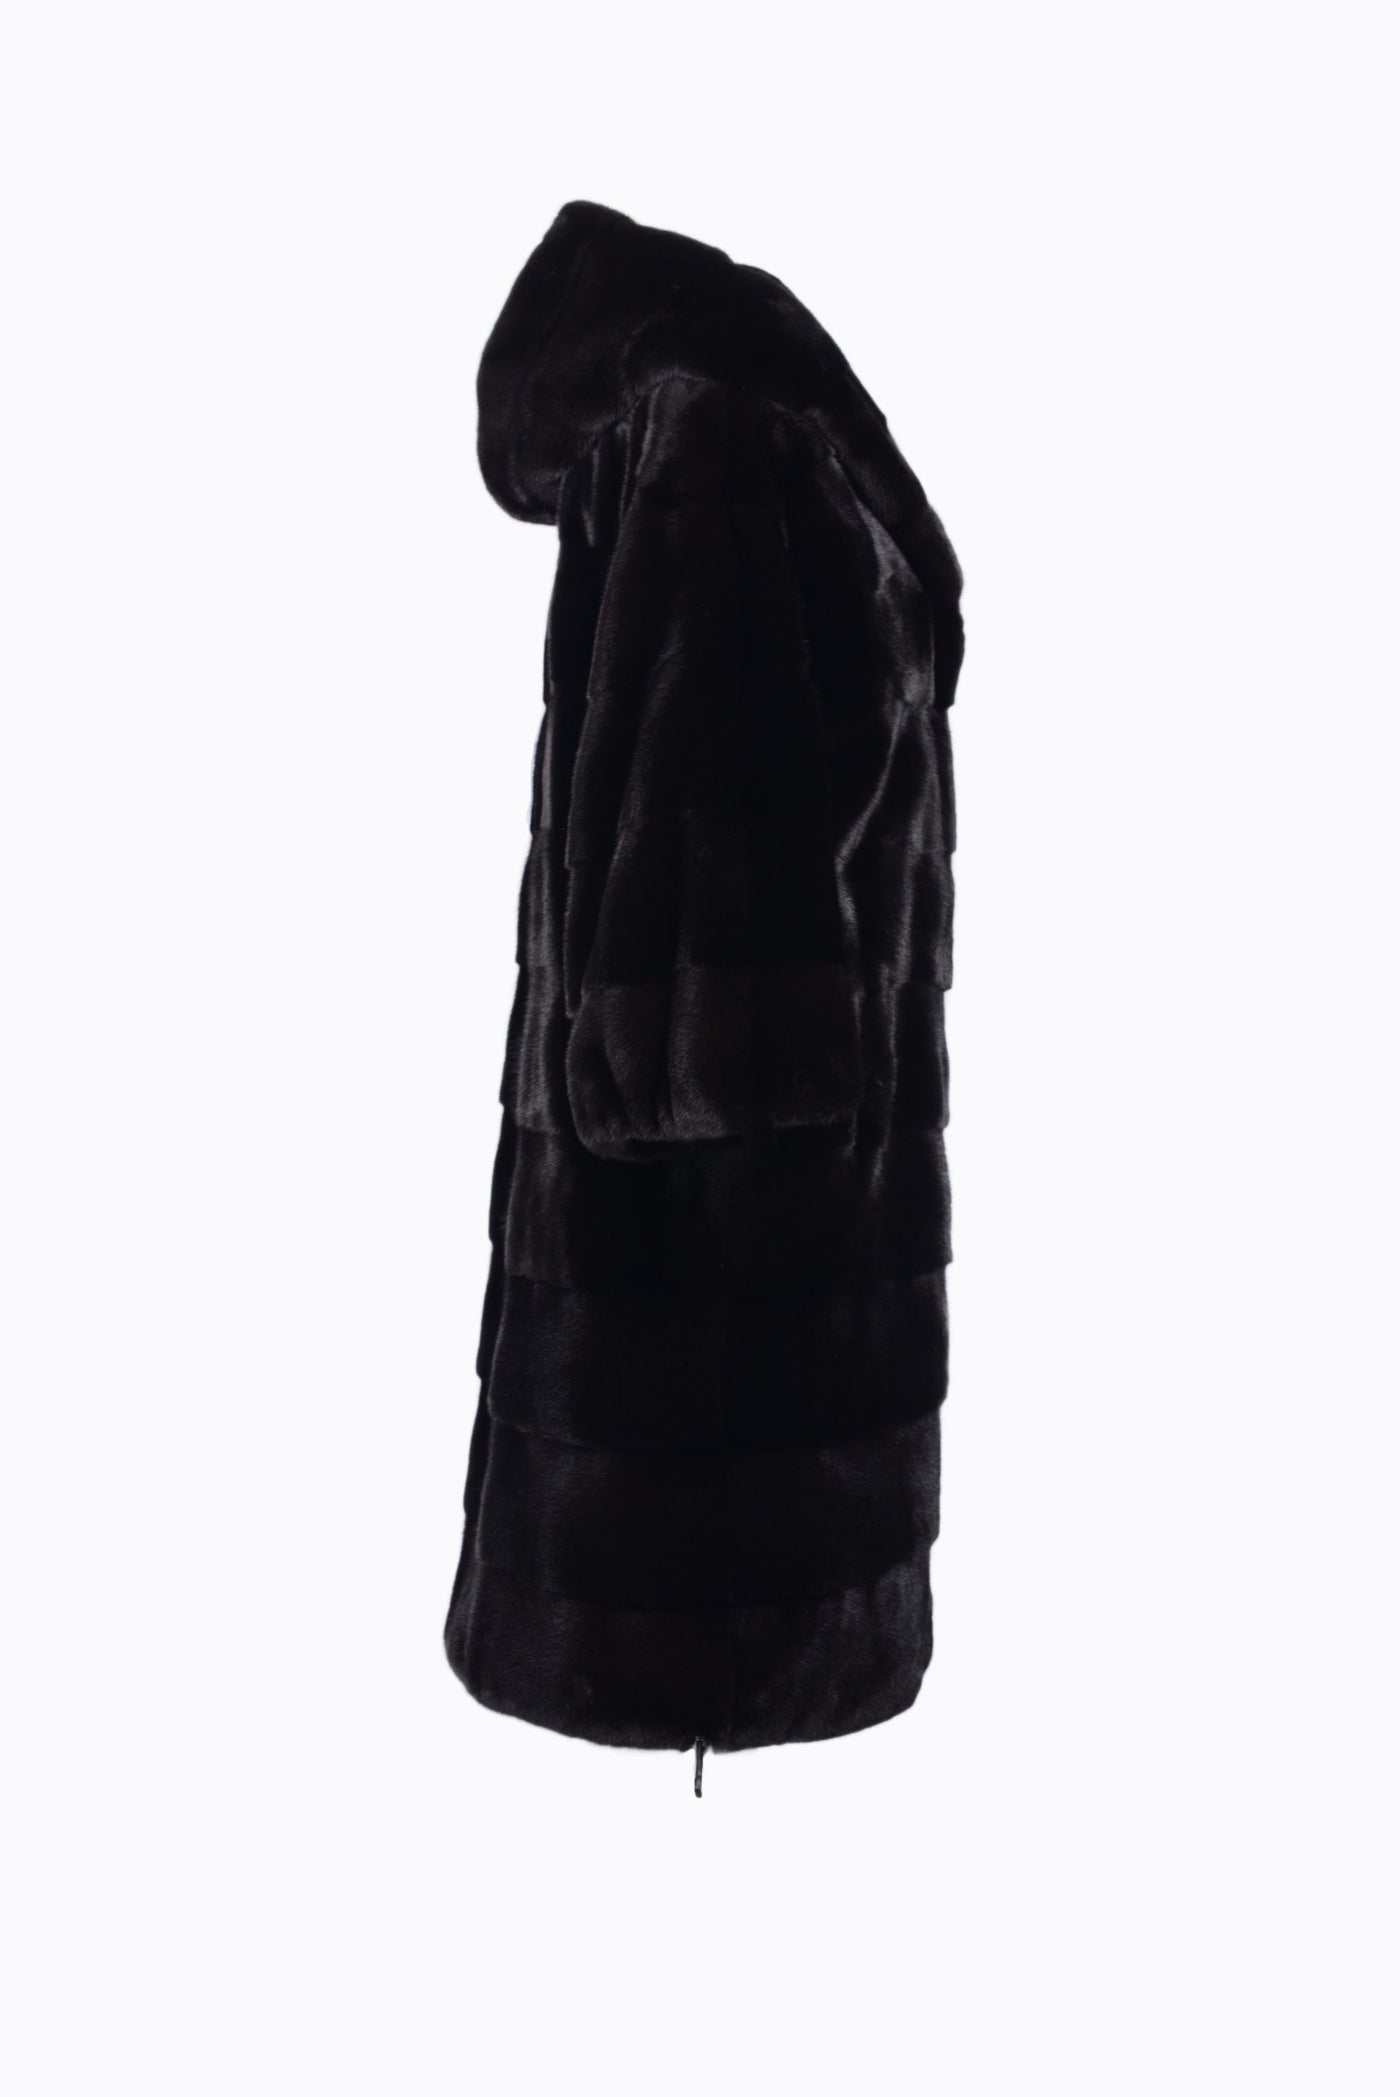 Casual sportive hooded mink coat